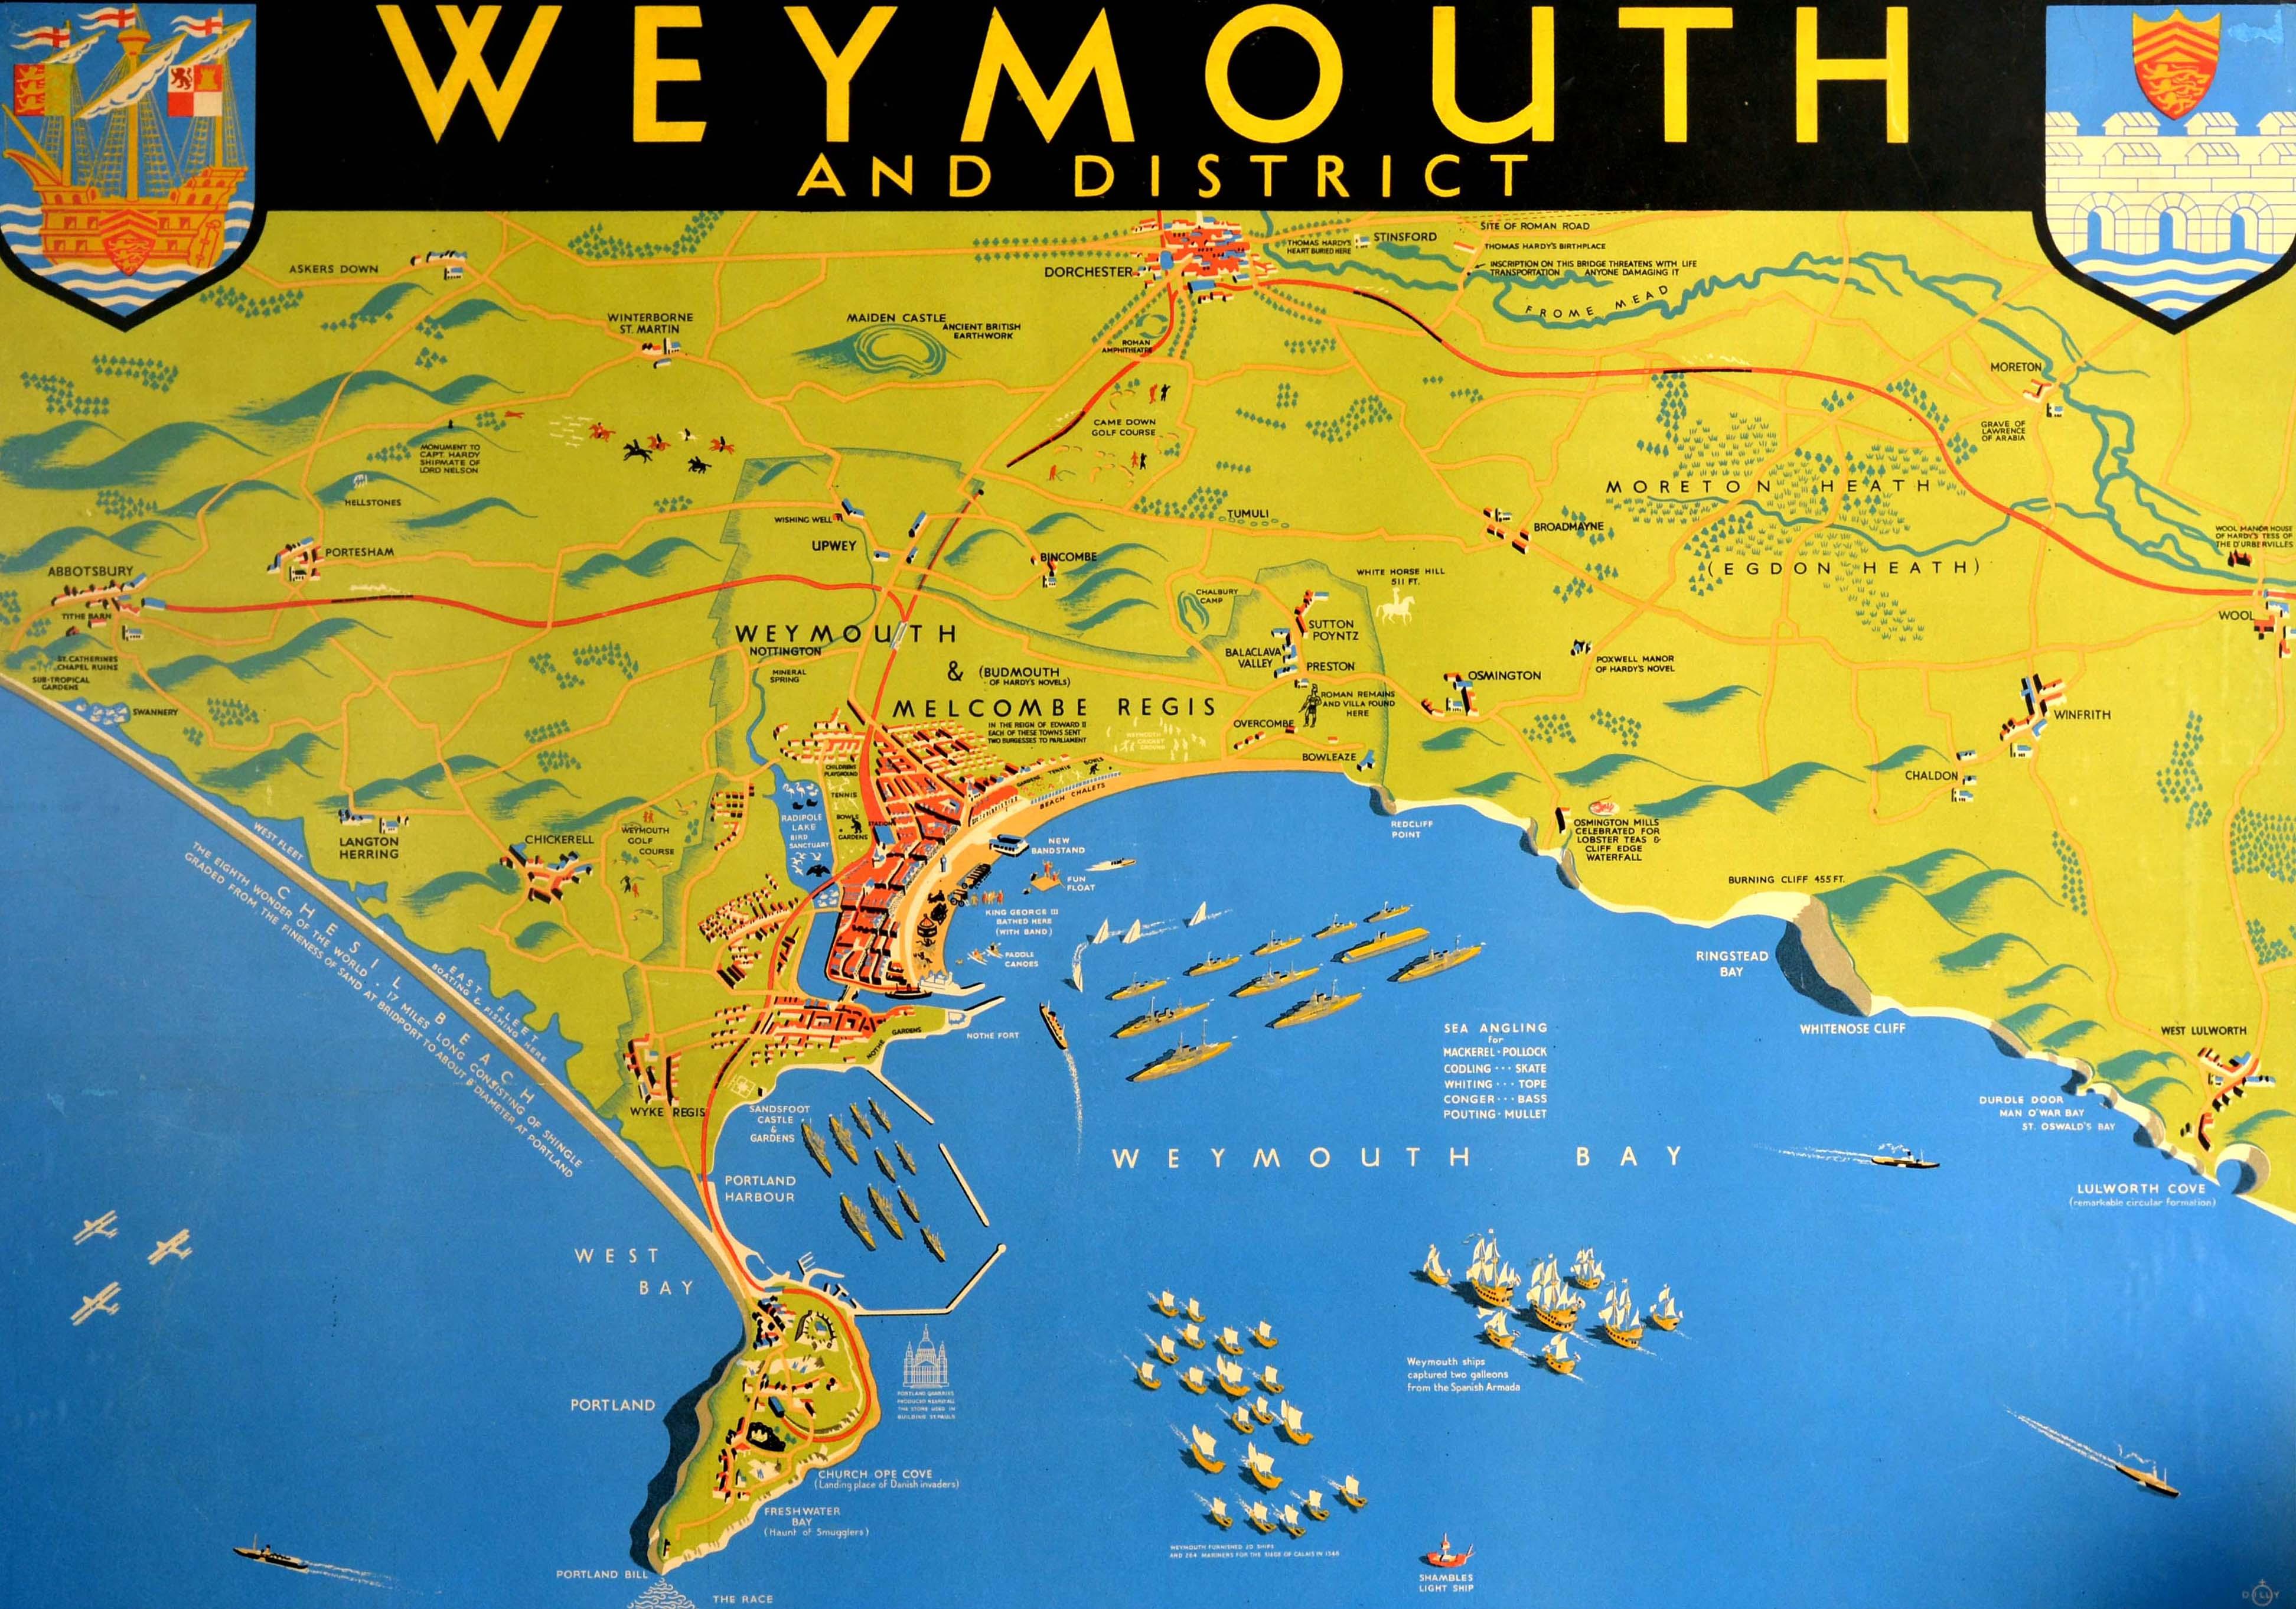 Original Vintage Railway Travel Poster Weymouth GWR SR Railway Map Express Train - Print by Unknown